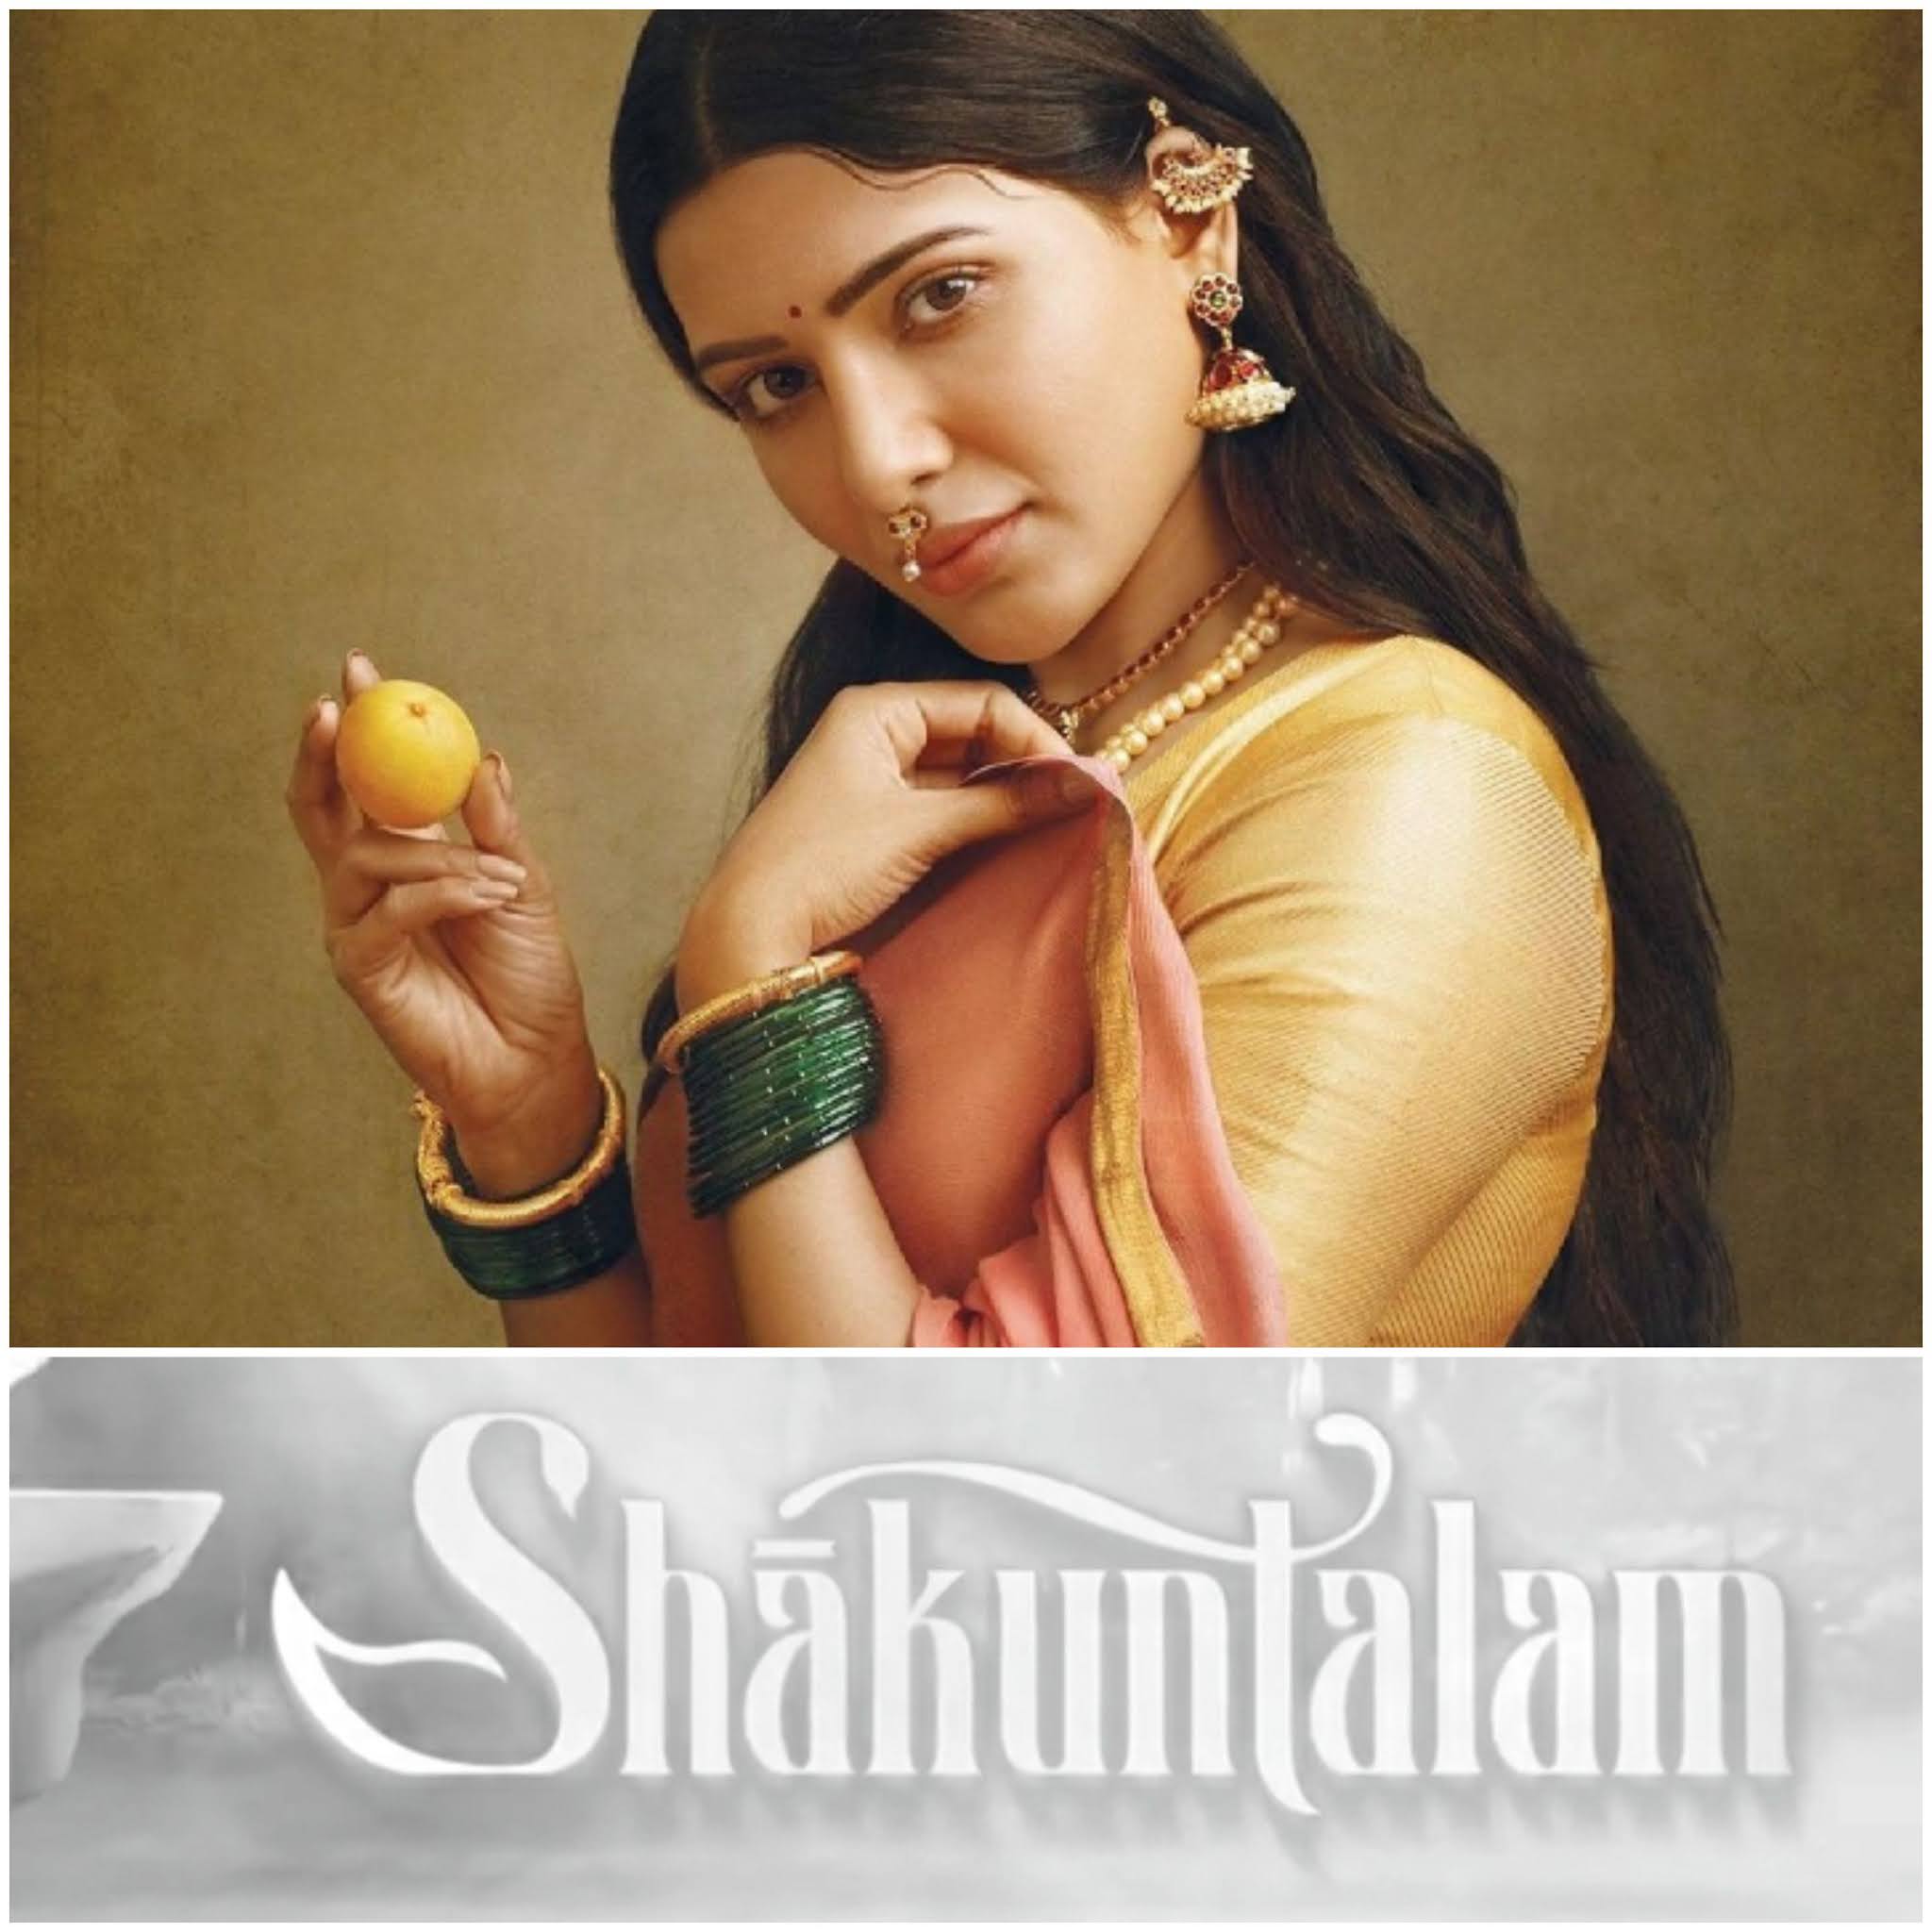 Shakunthalam Movie Image